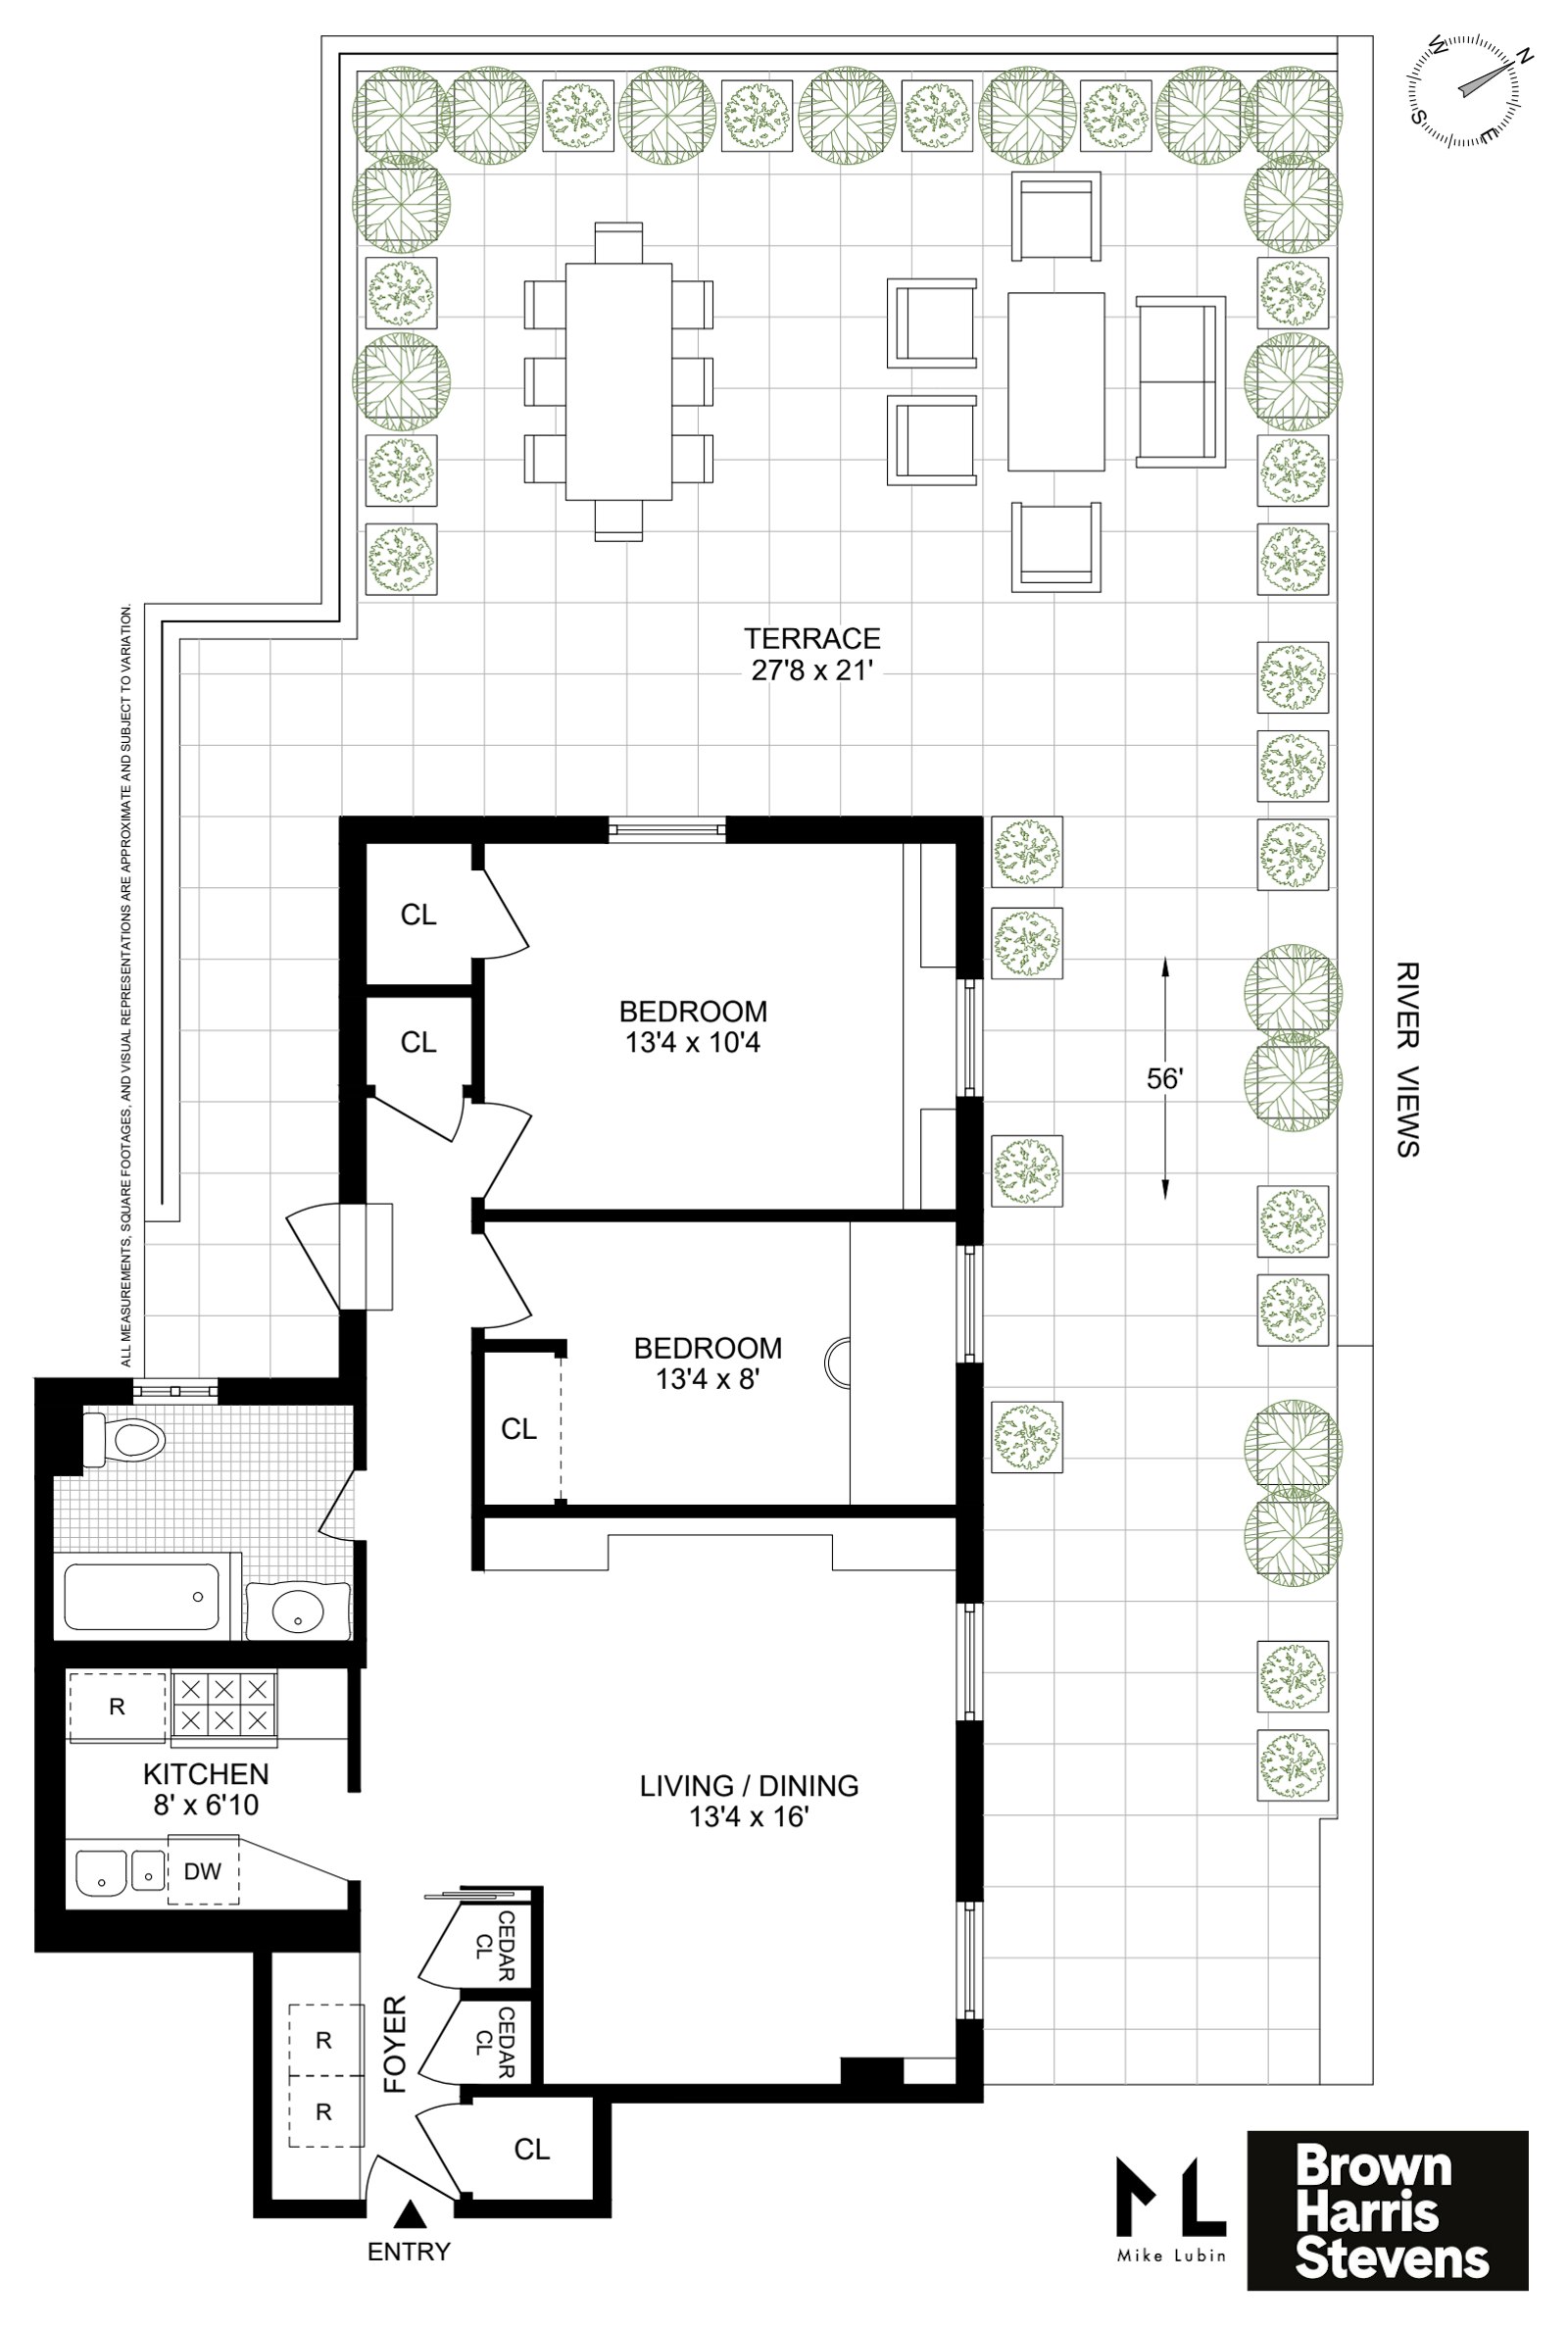 Floorplan for 310 West 72nd Street, PH3